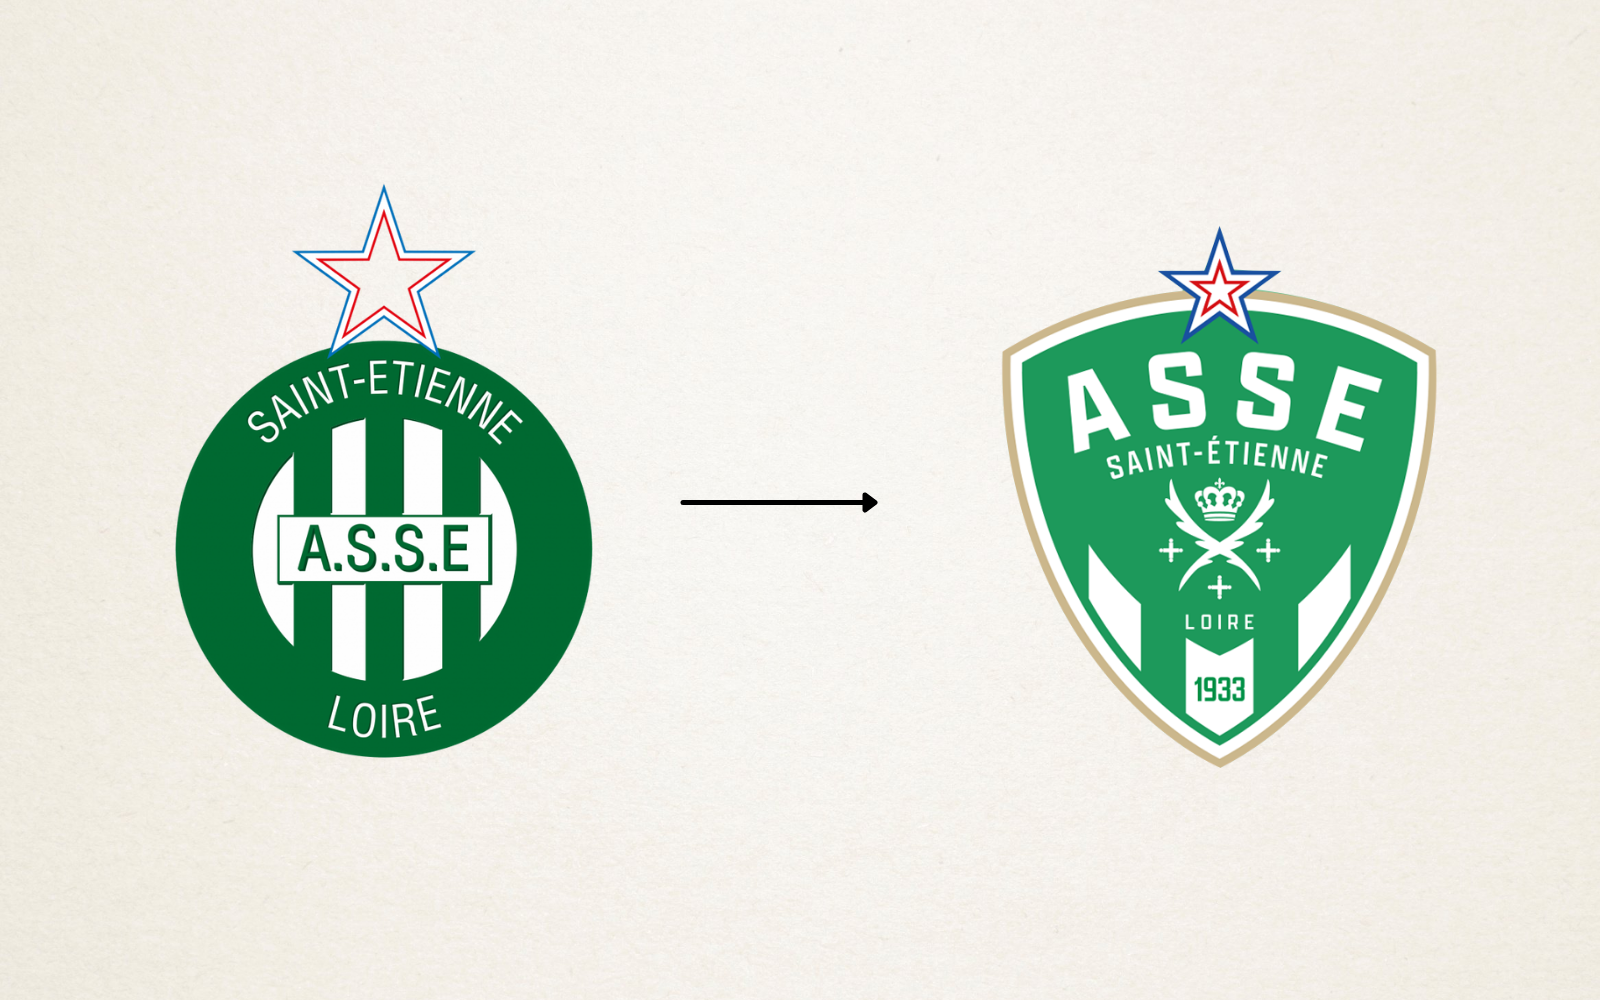 Saint-Étienne has changed its logo.